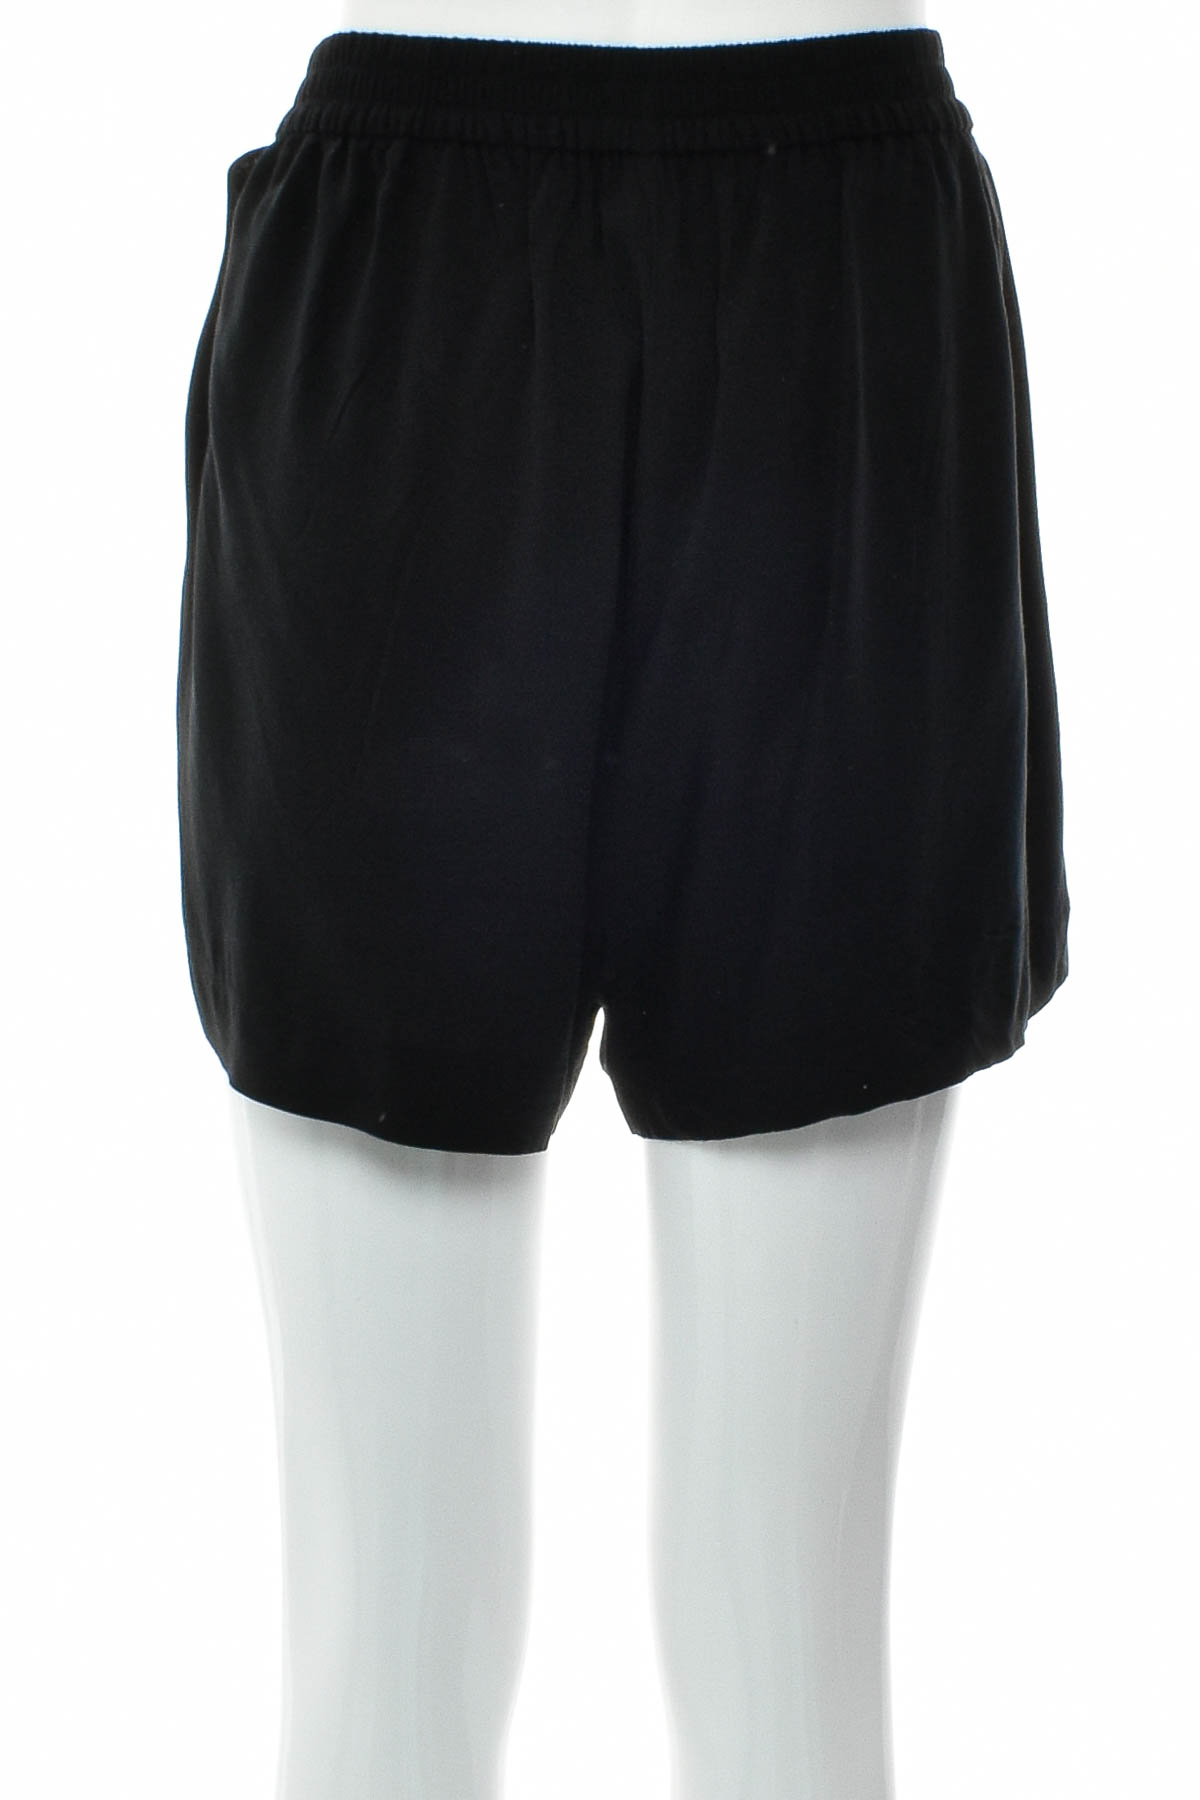 Female shorts - Laura Torelli - 1